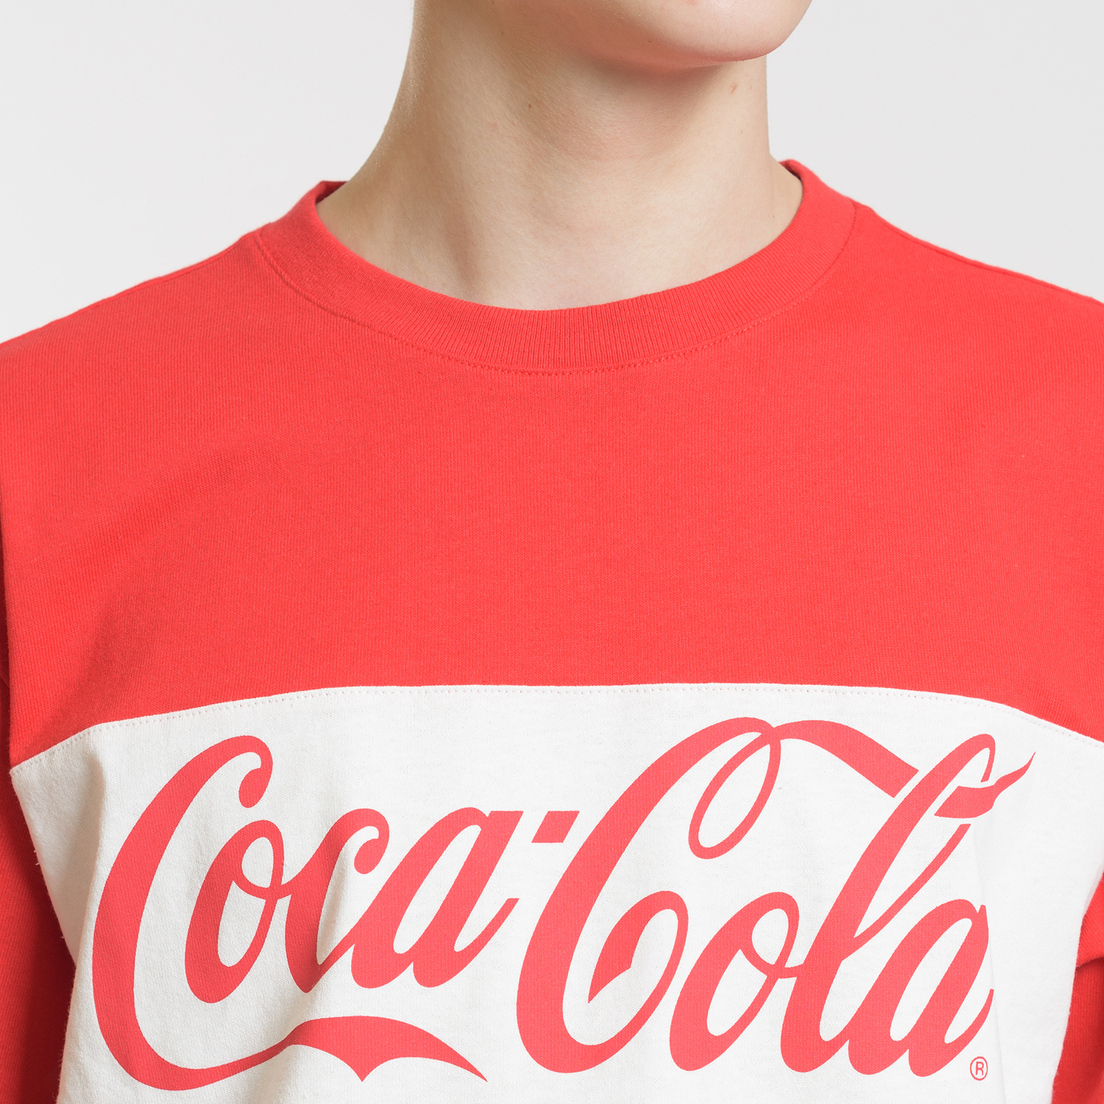 Tommy Jeans Мужская футболка x Coca-Cola Crew Neck